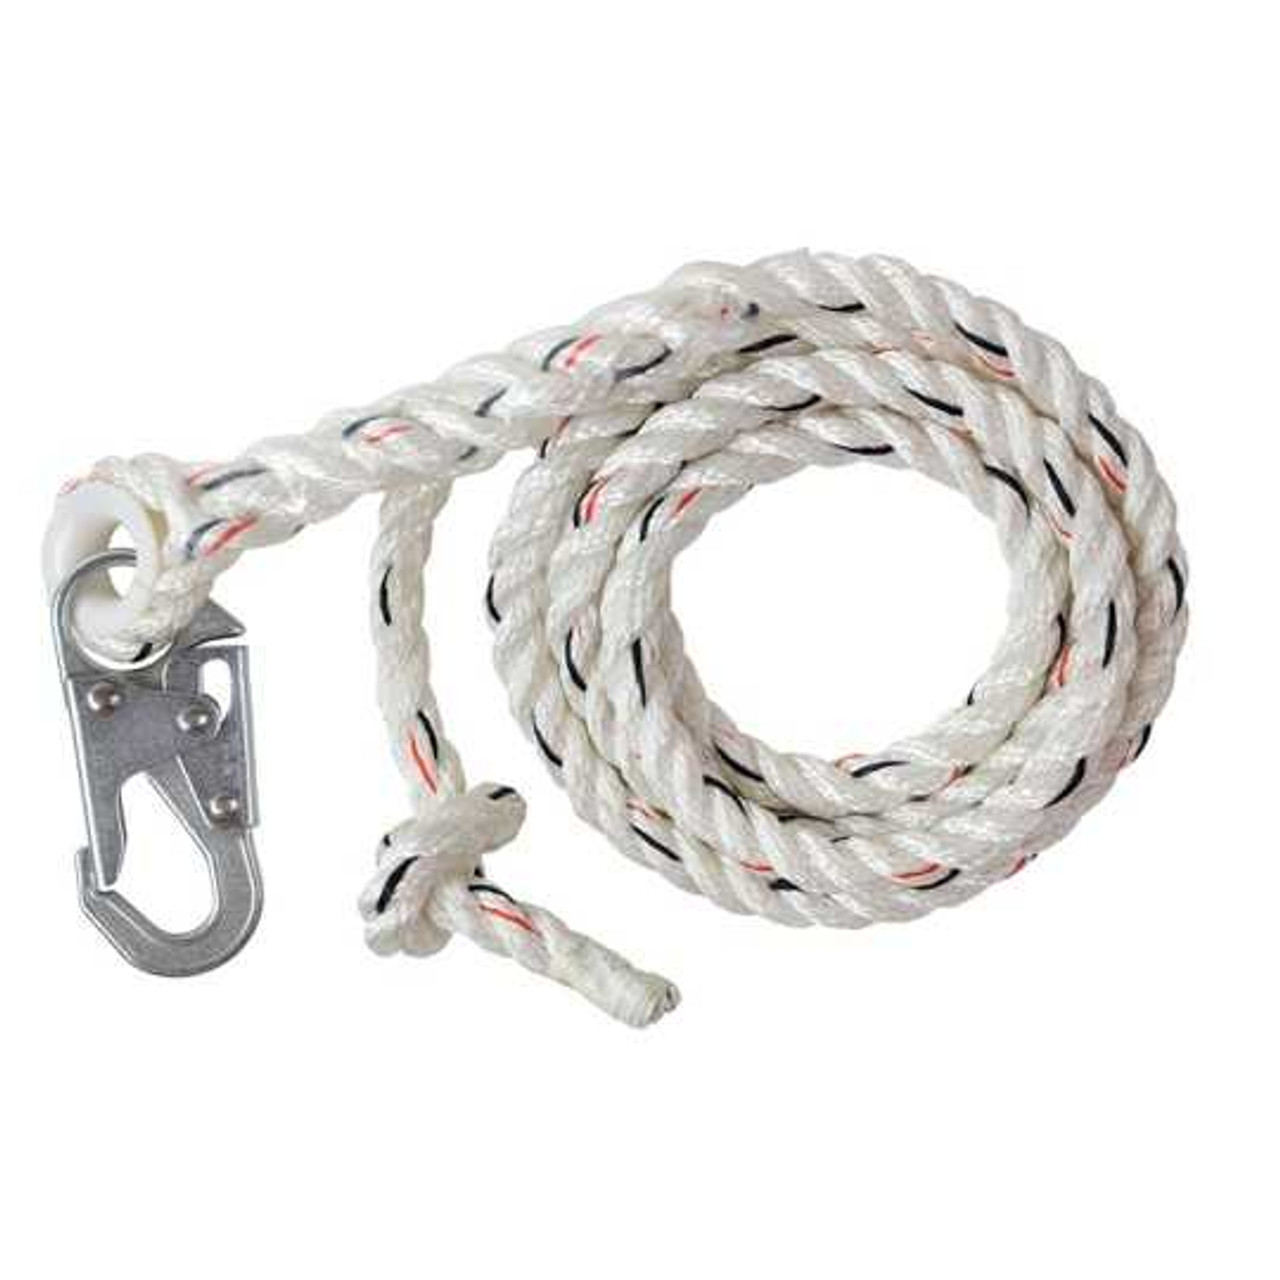 Vertical Lifeline w/Snap Hook Rope Size: 50